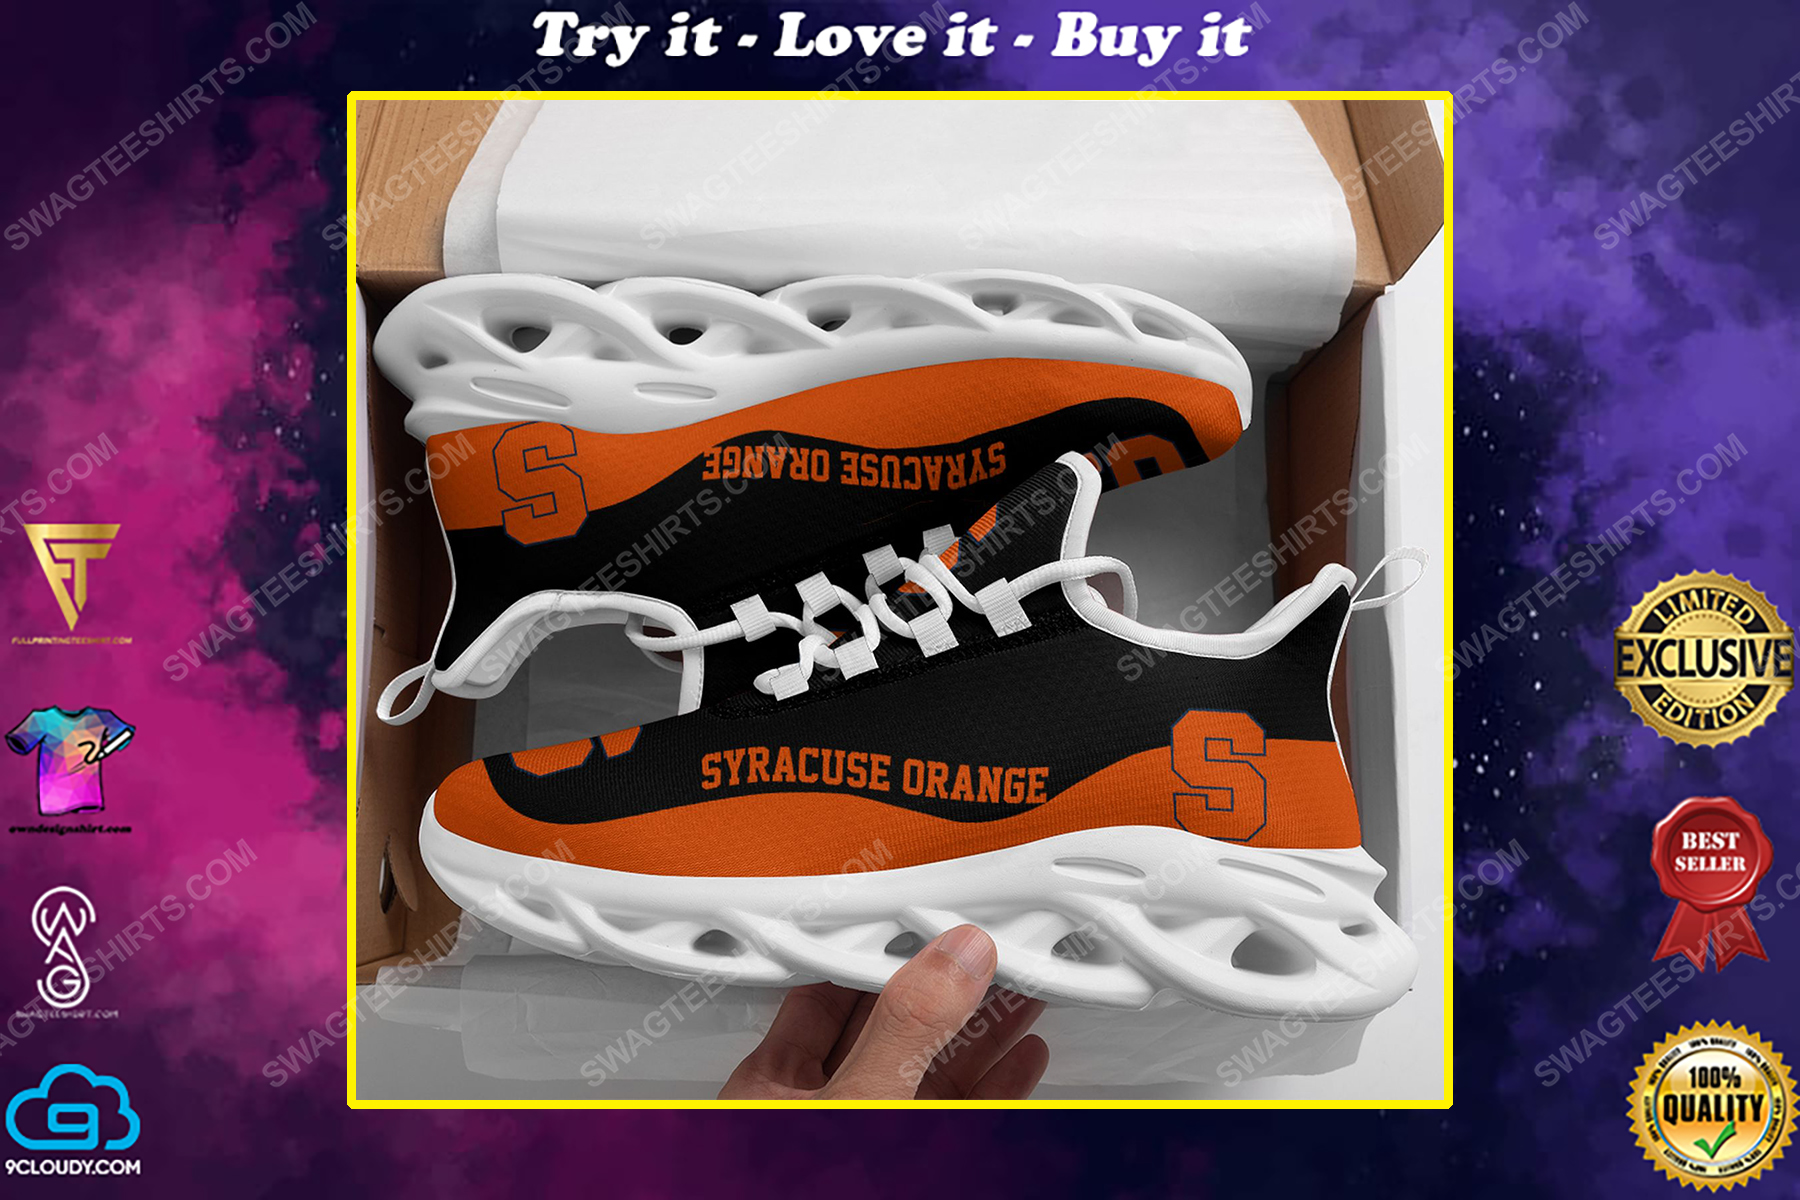 Syracuse orange football team max soul shoes